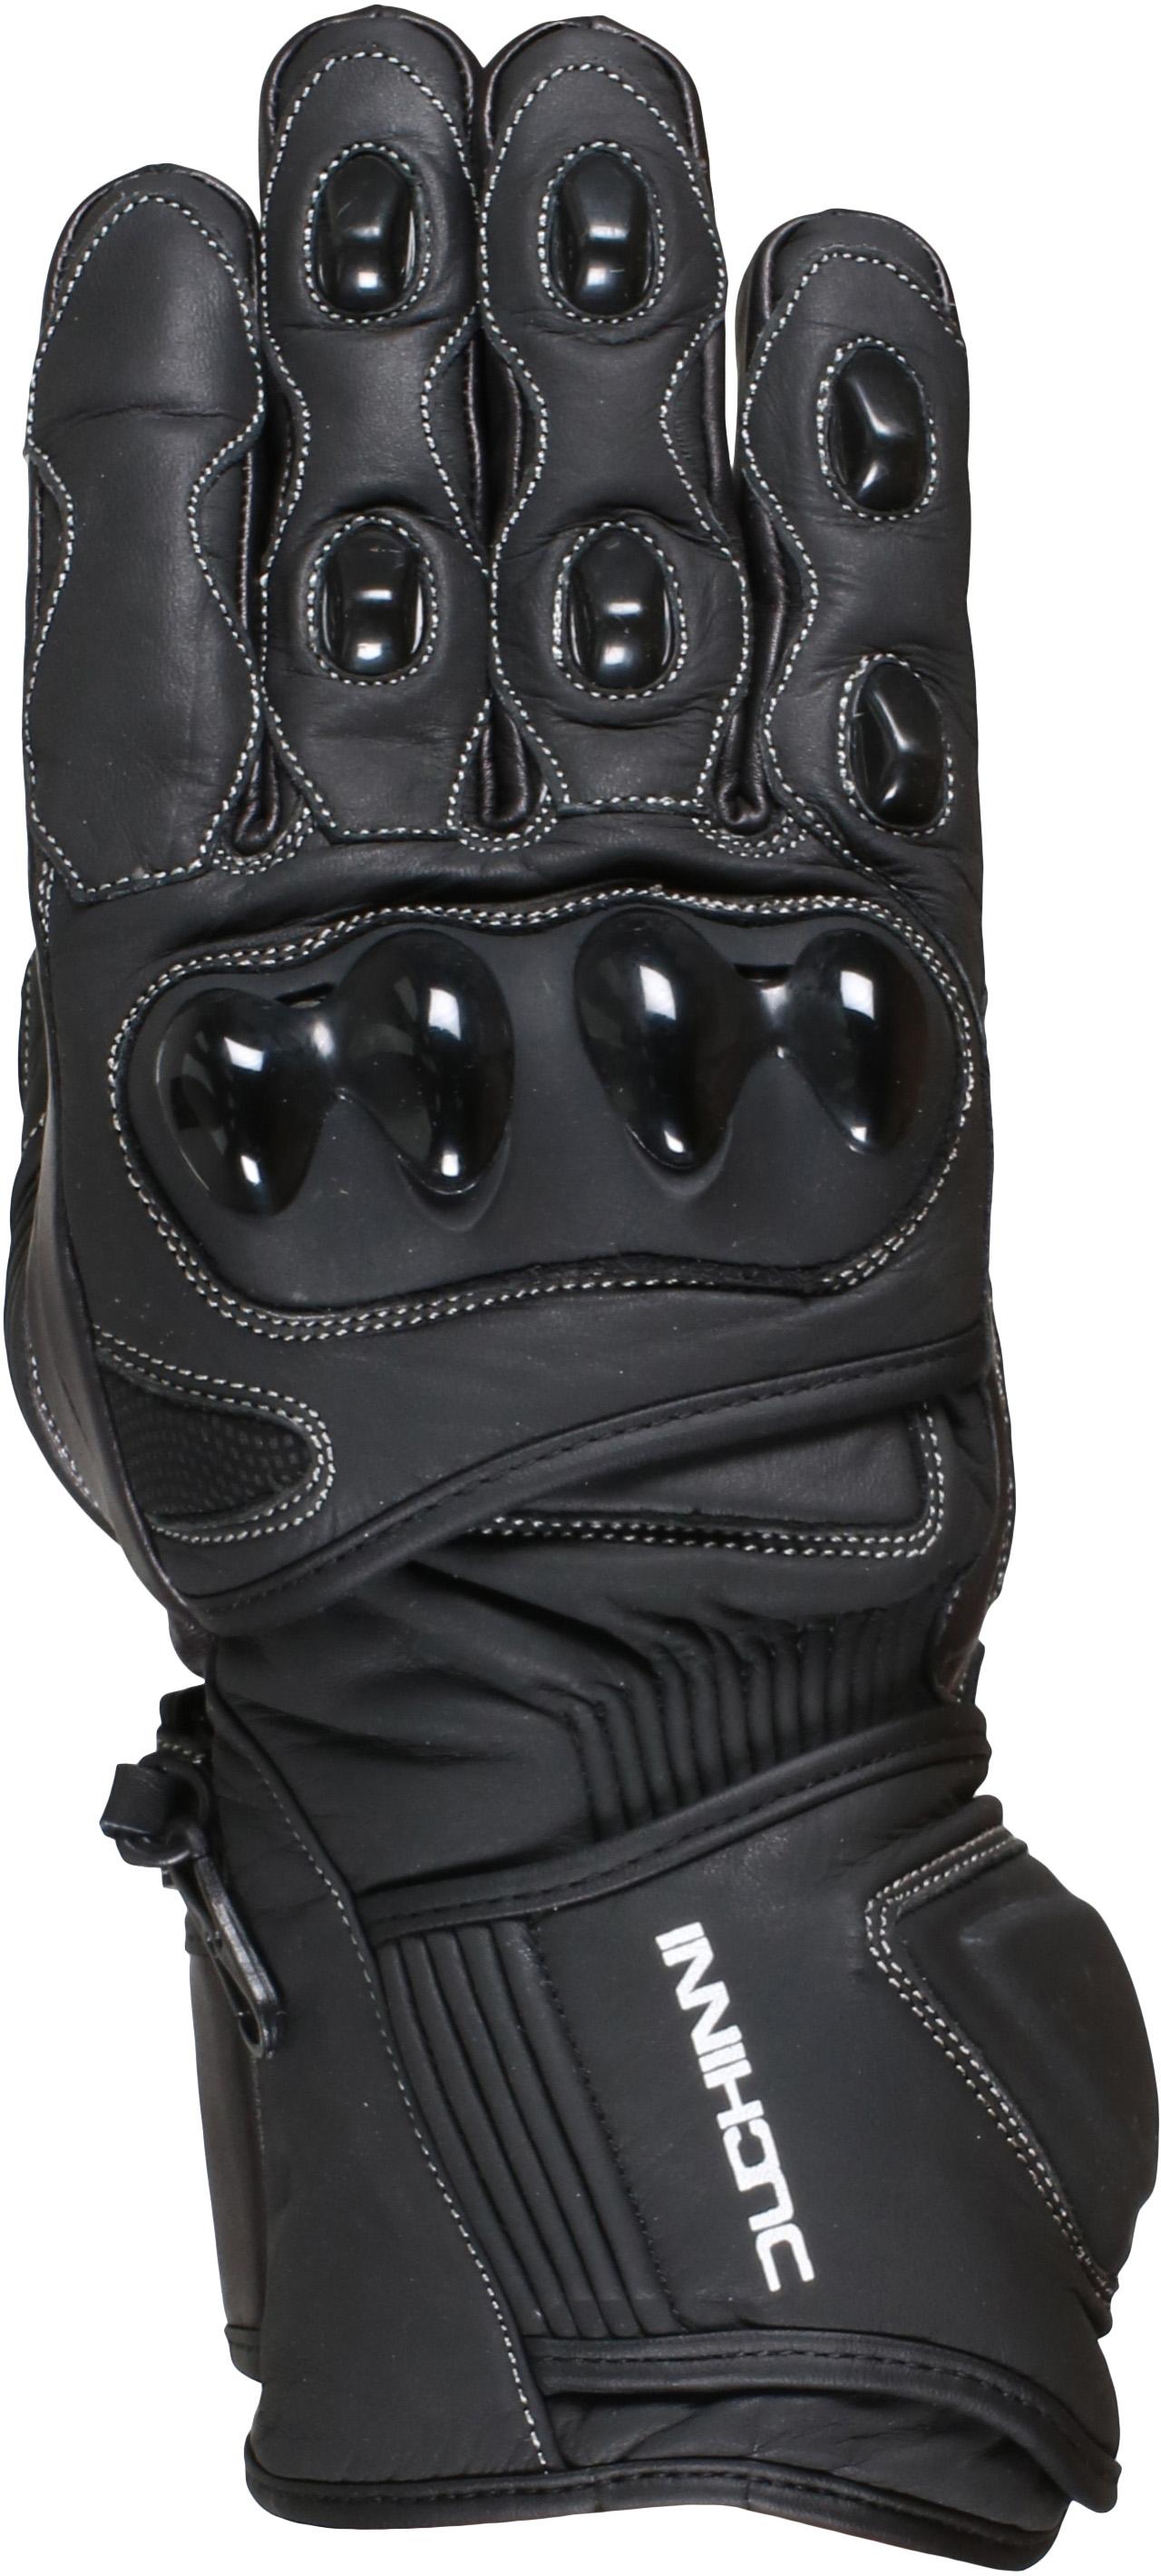 Duchinni Spartan Motorcycle Gloves - Black, Xl